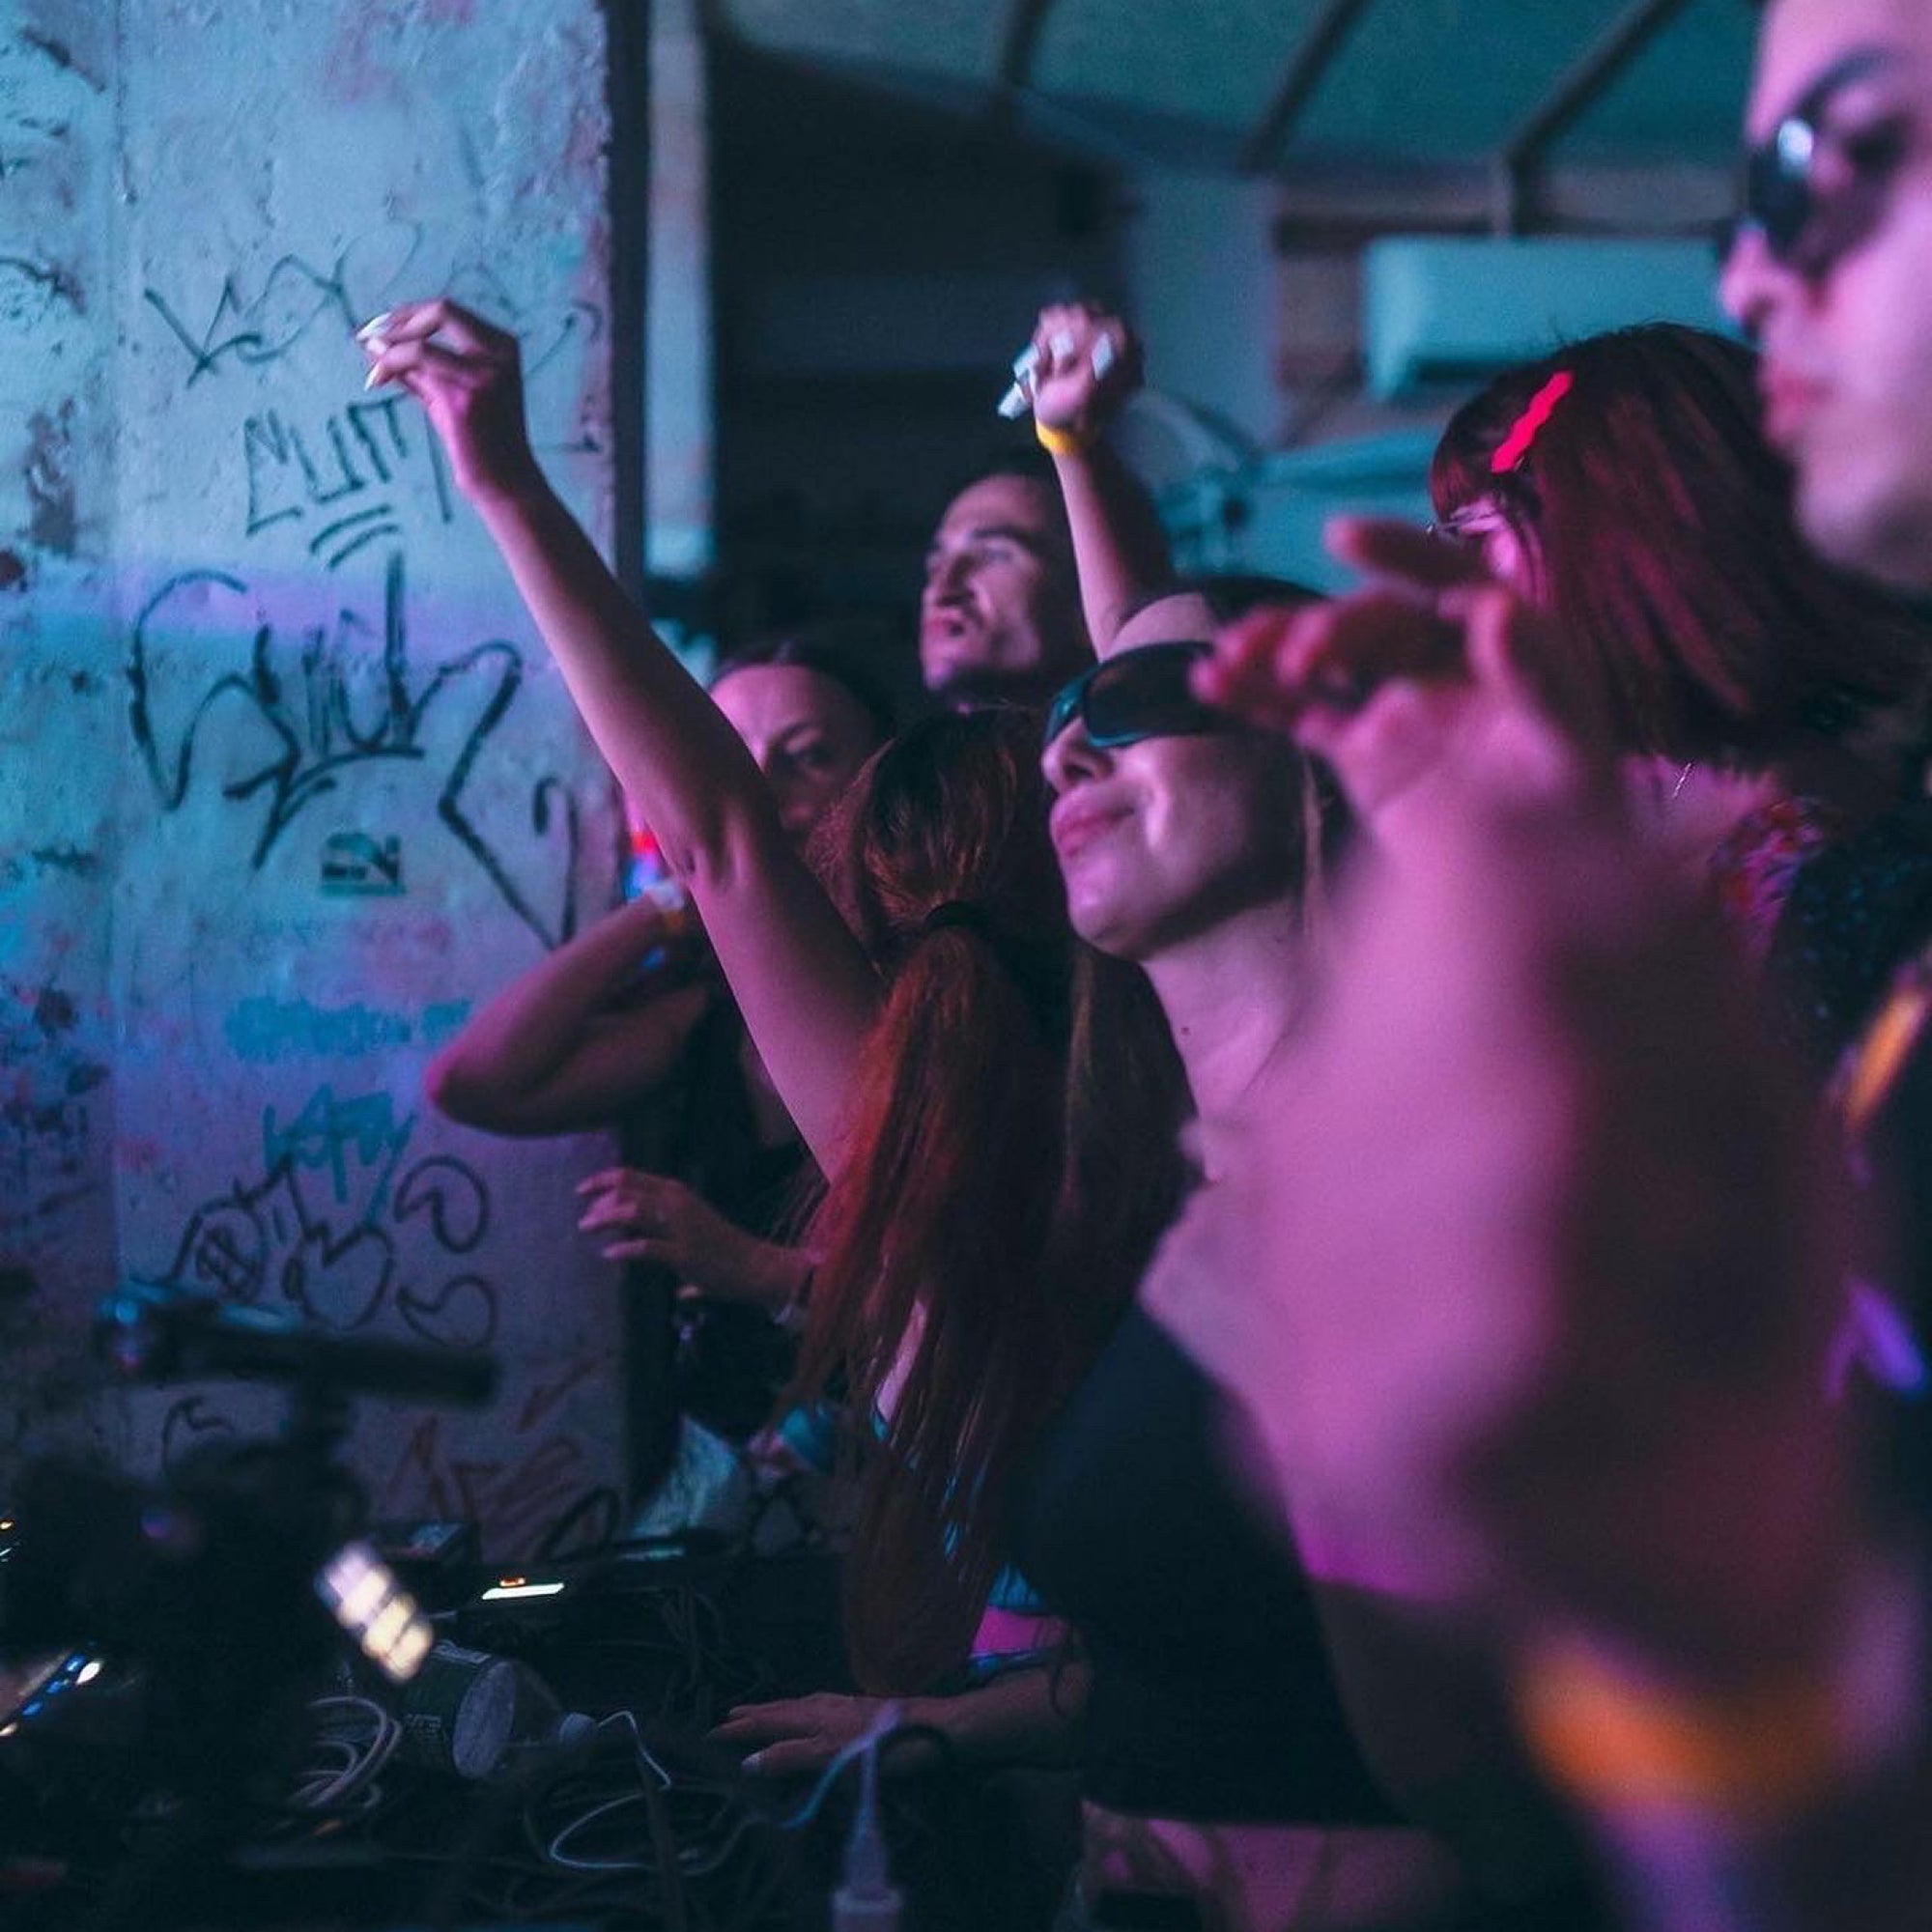 Brooklyn's High-Energy Rave Scene